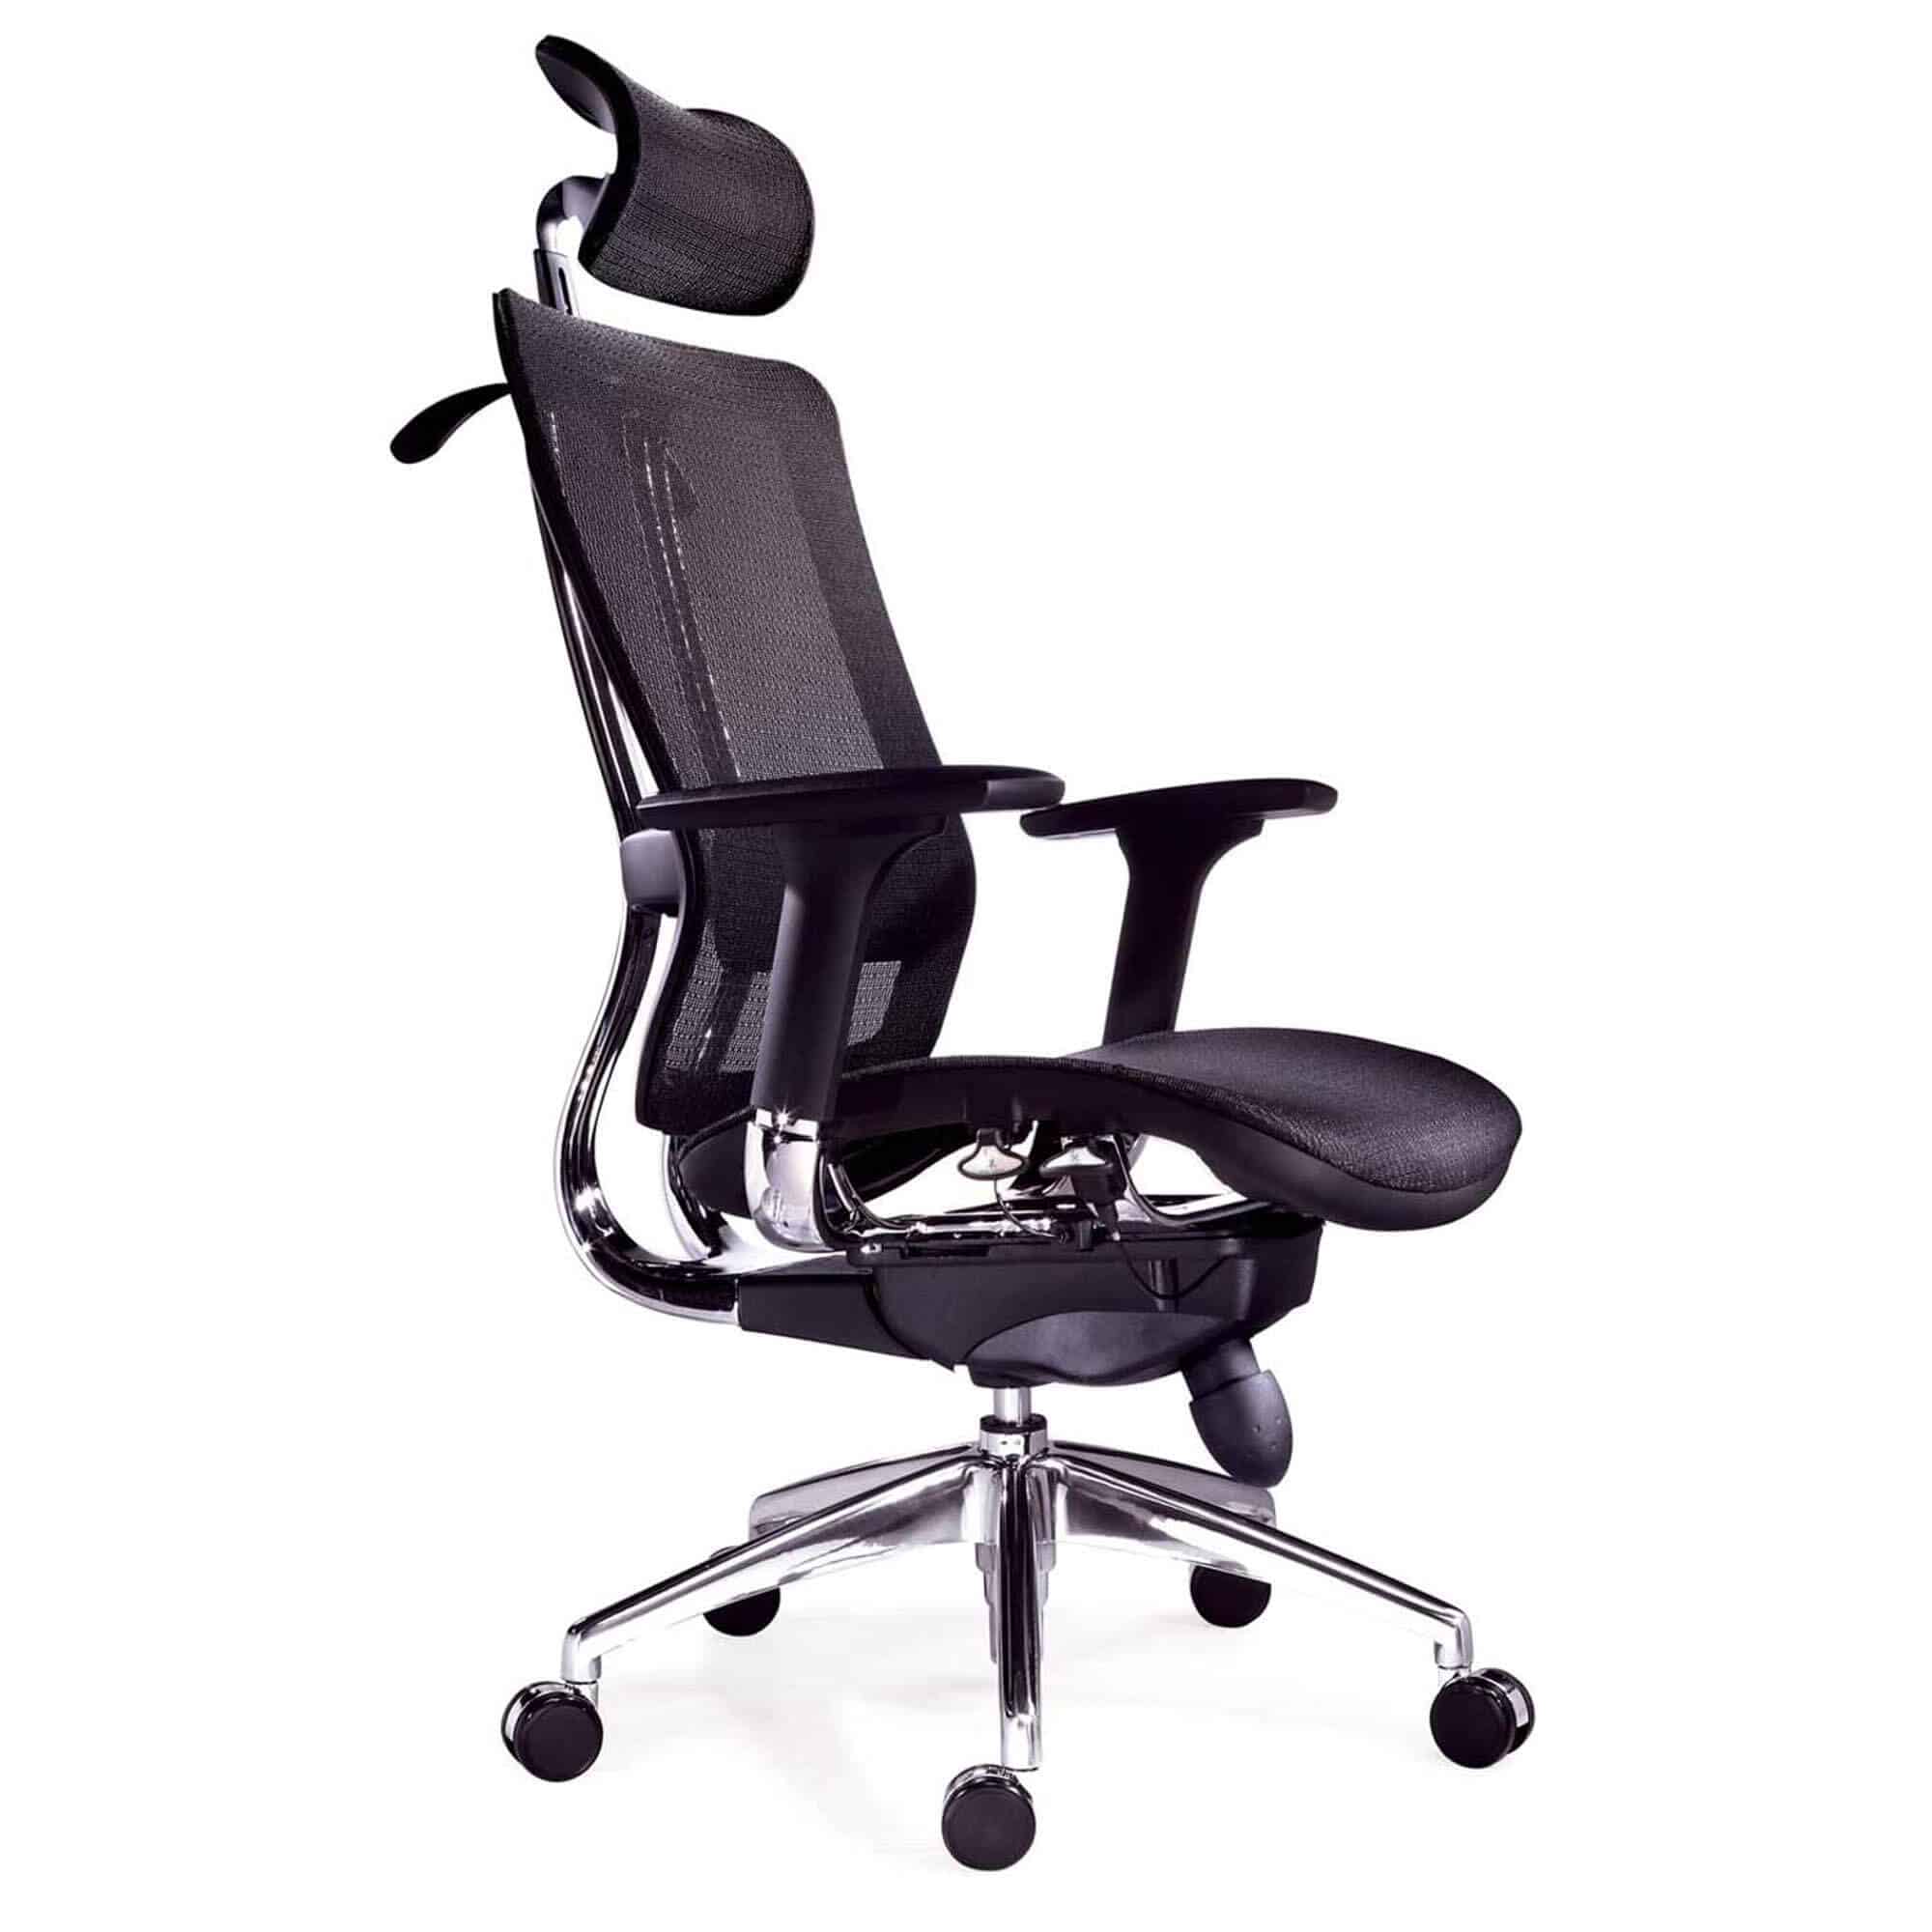 A-completely-adjustable-ergonomic-chair.jpg